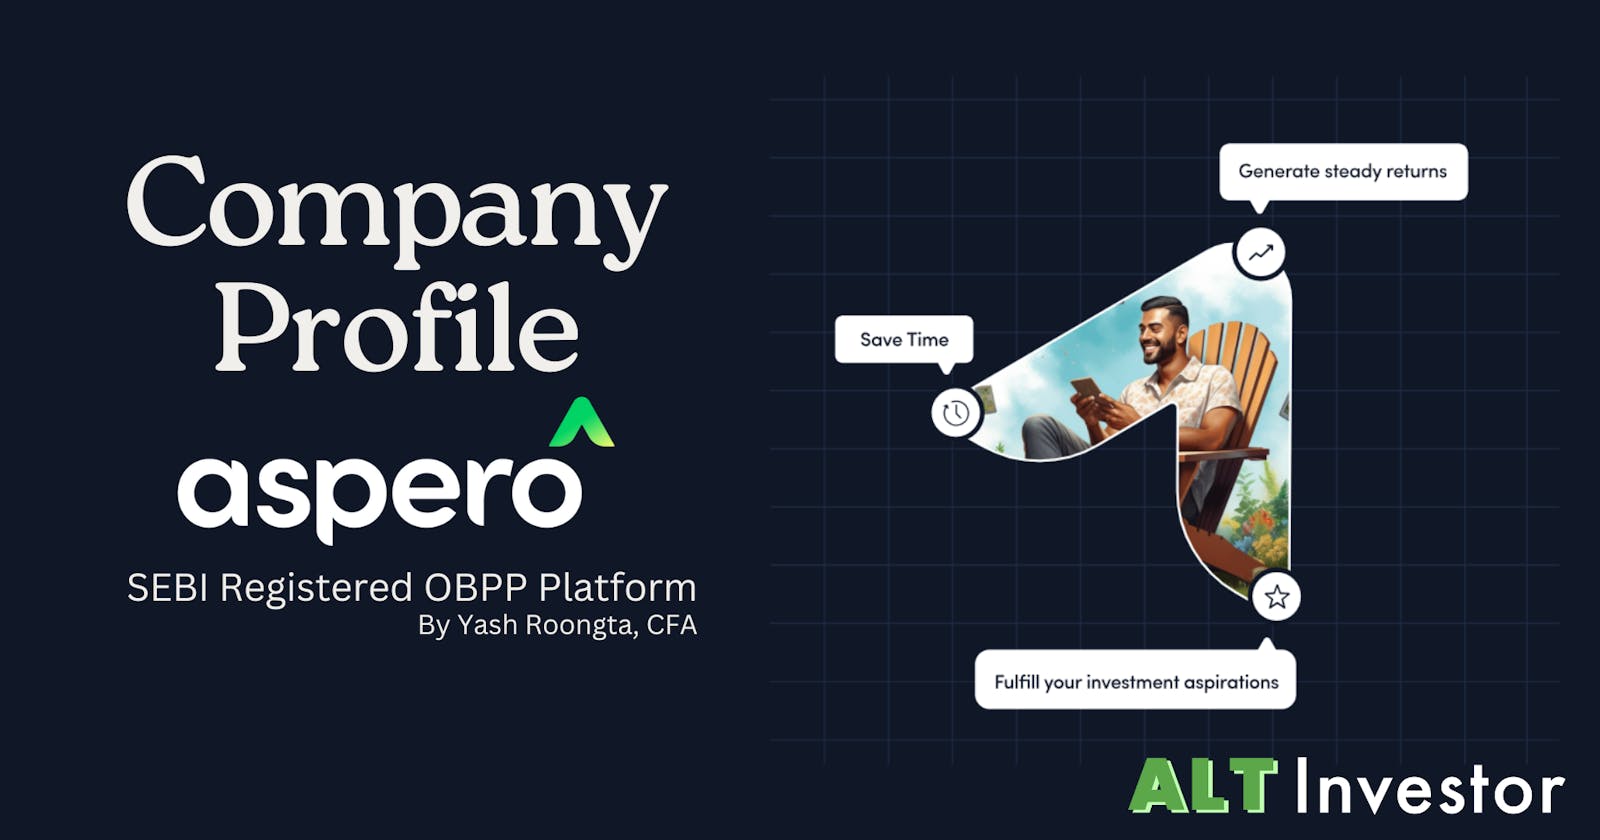 Company Profile: Aspero (SEBI Registered OBPP Platform)